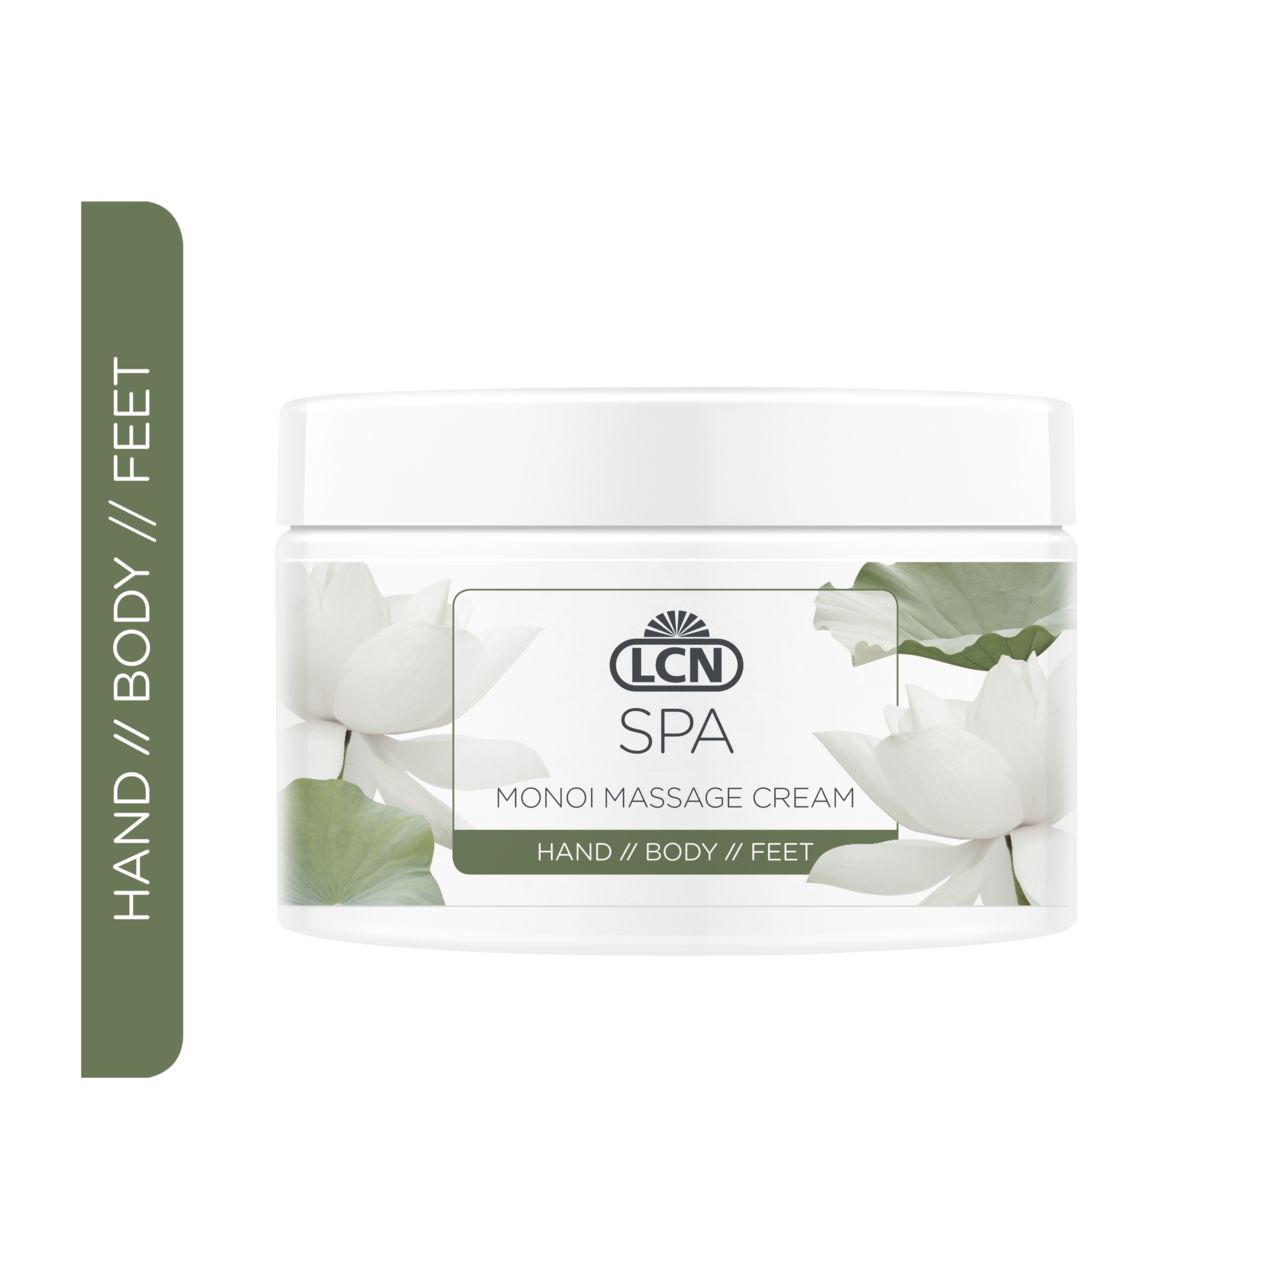 SPA Monoi Massage Cream